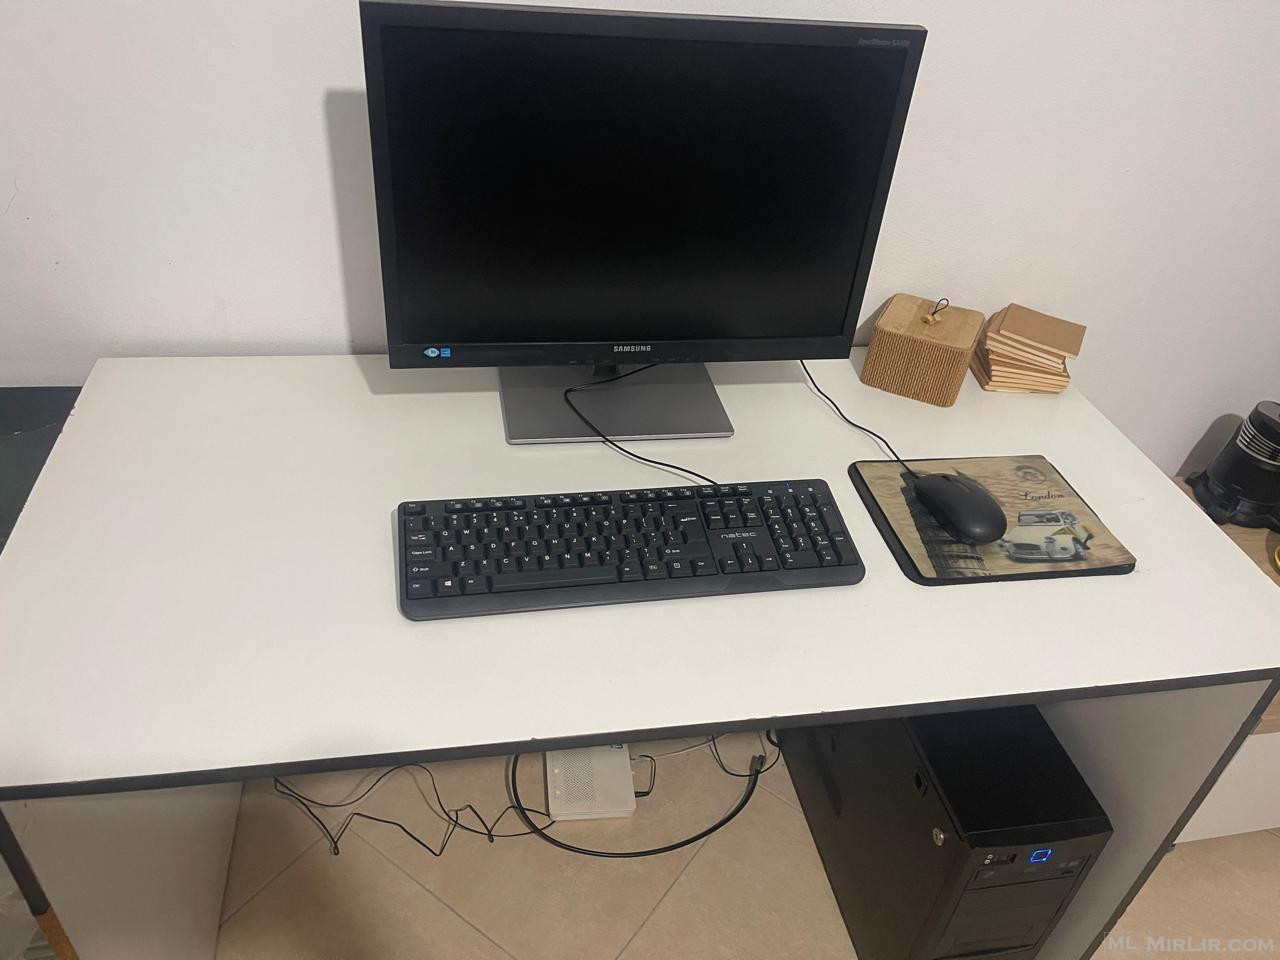 Shitet PC workstation i plote se bashku me tavoline